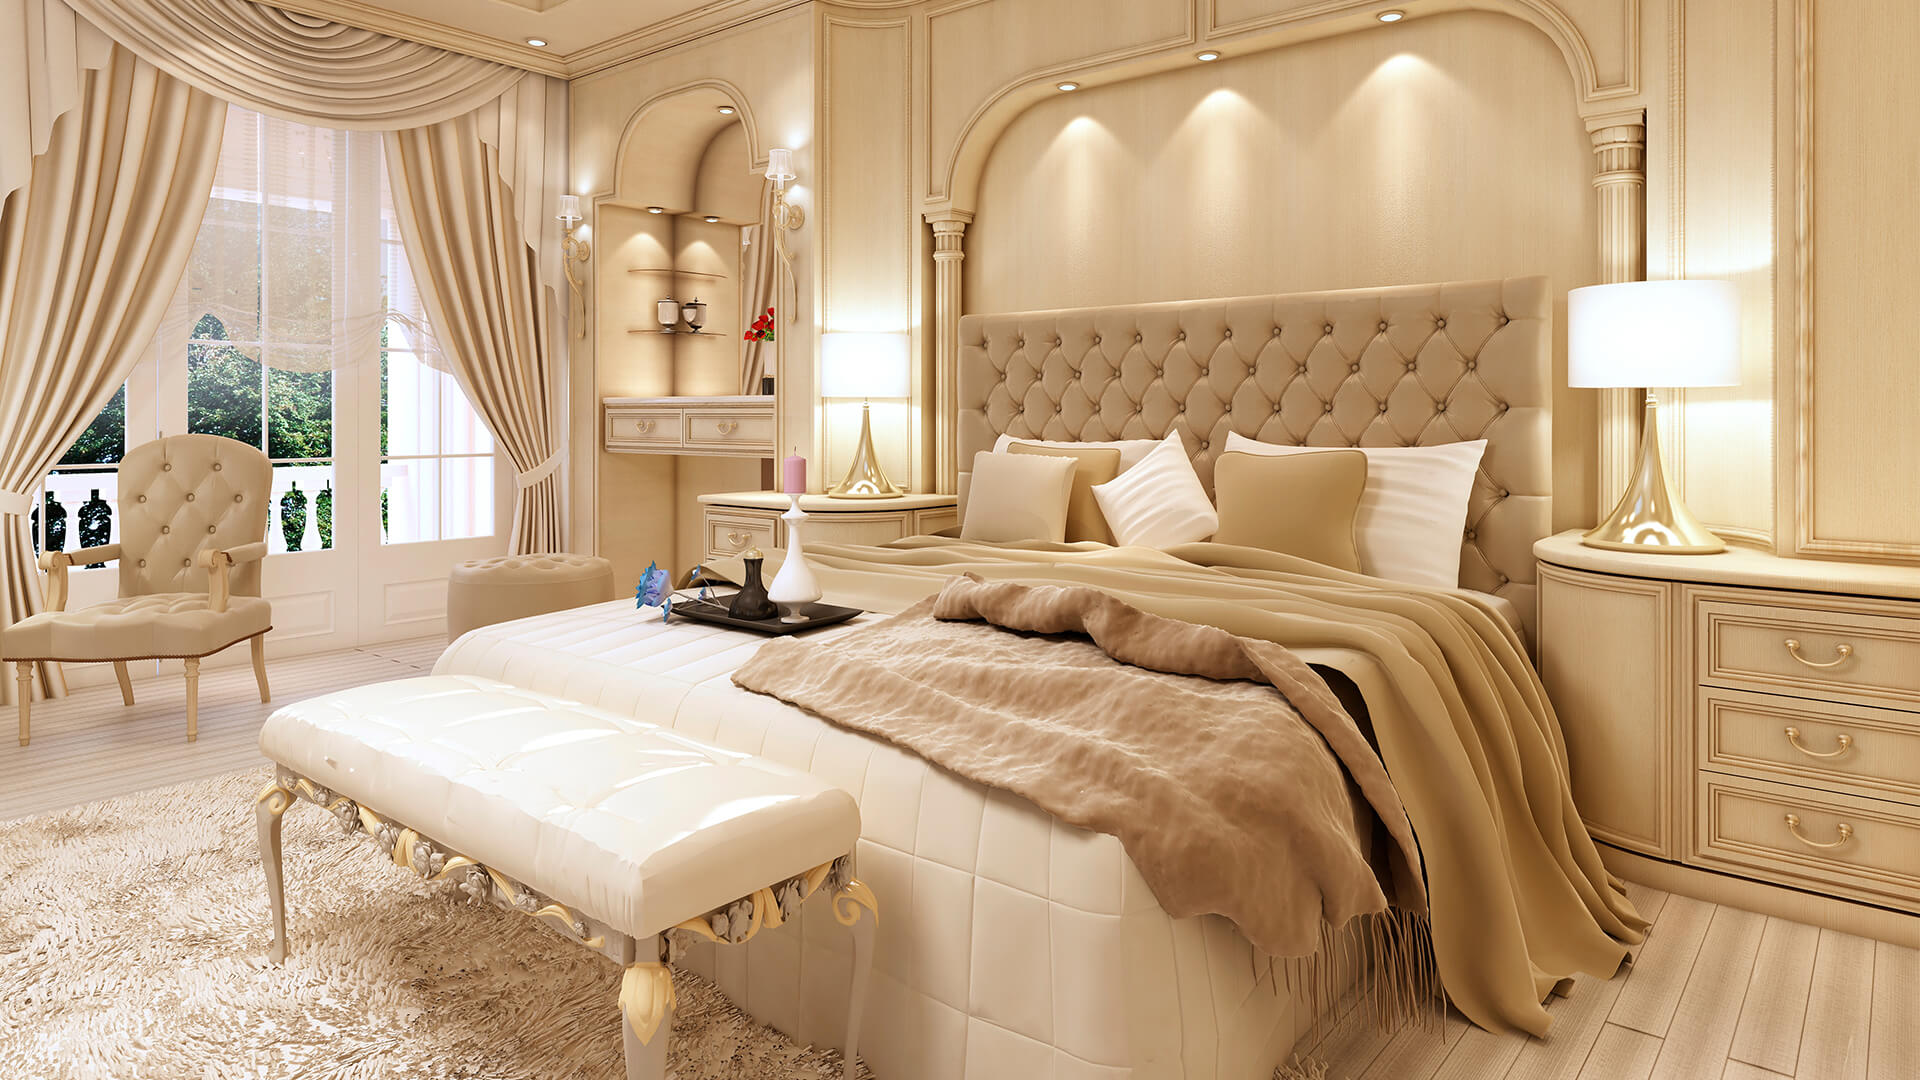 5 star hotel bedroom furniture